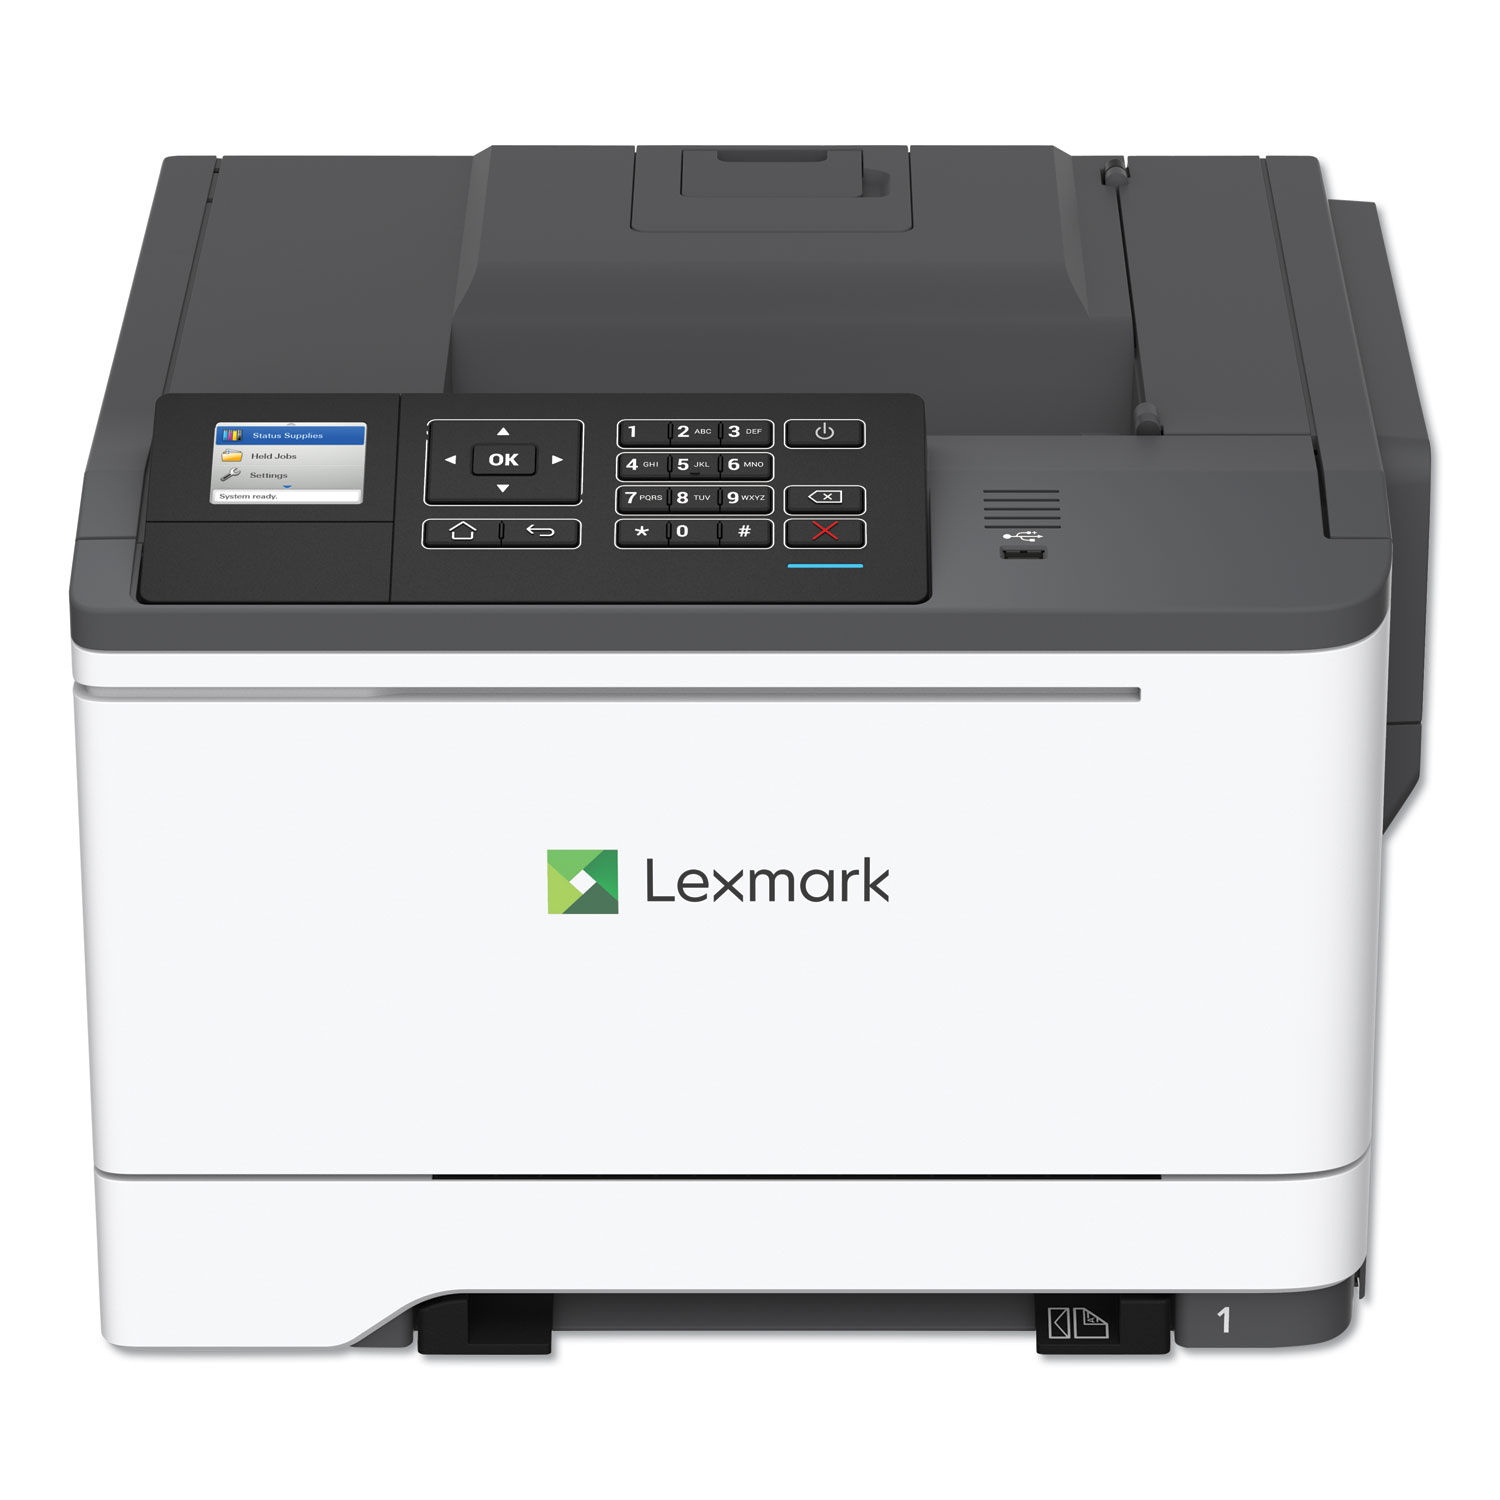  Lexmark 42CC130 C2425dw Wireless Laser Printer (LEX42CC130) 